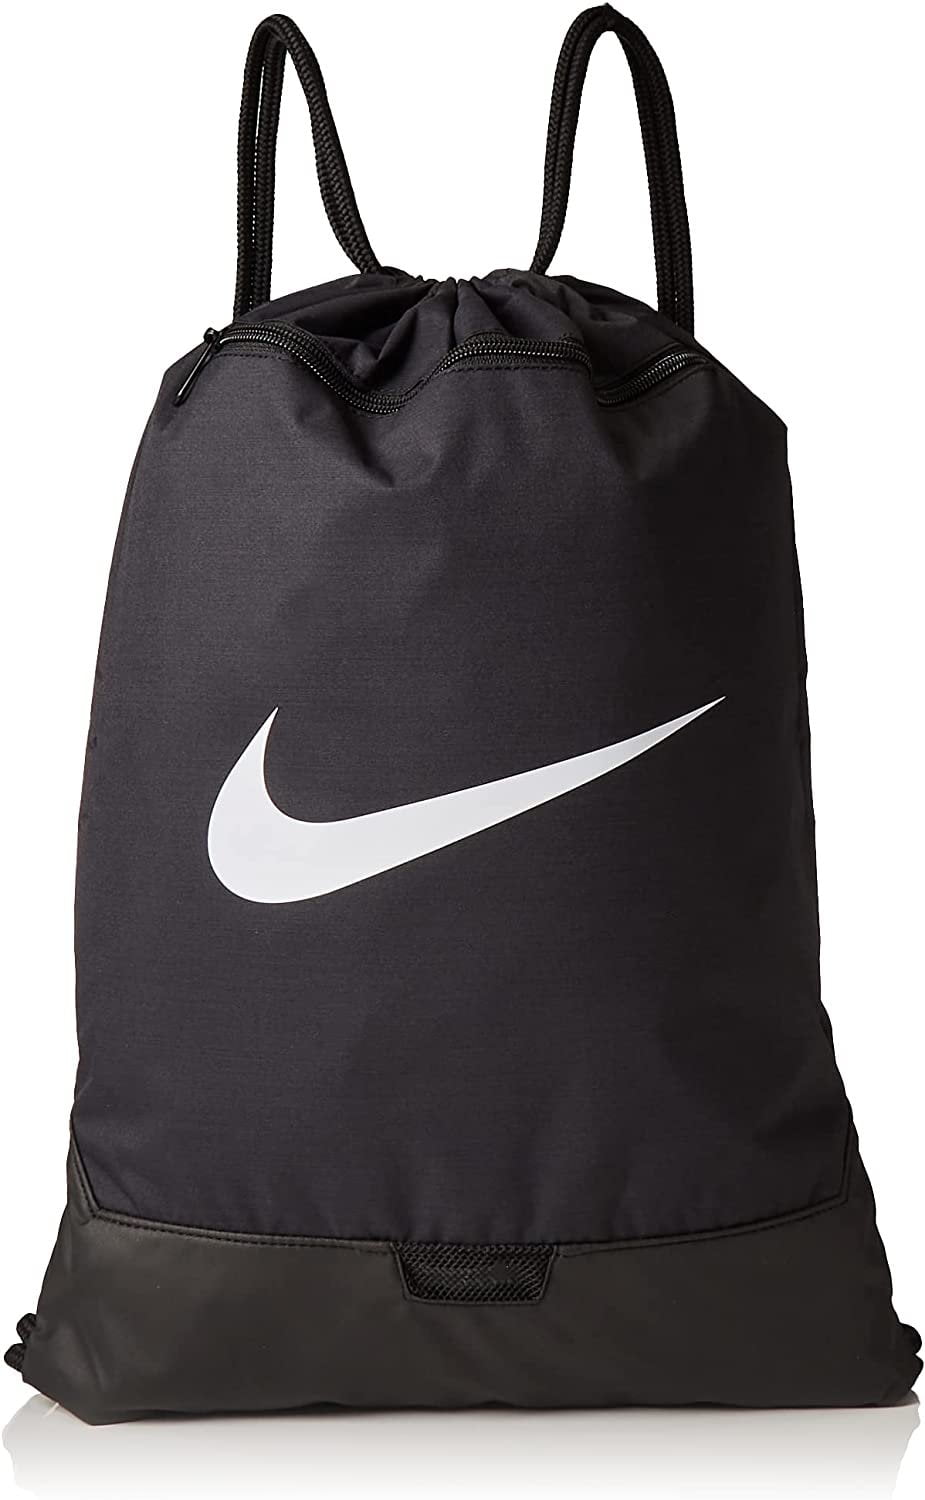 Nike Backpack Rucksack School Bag Black Gym Sports Unisex Travel Holiday PE